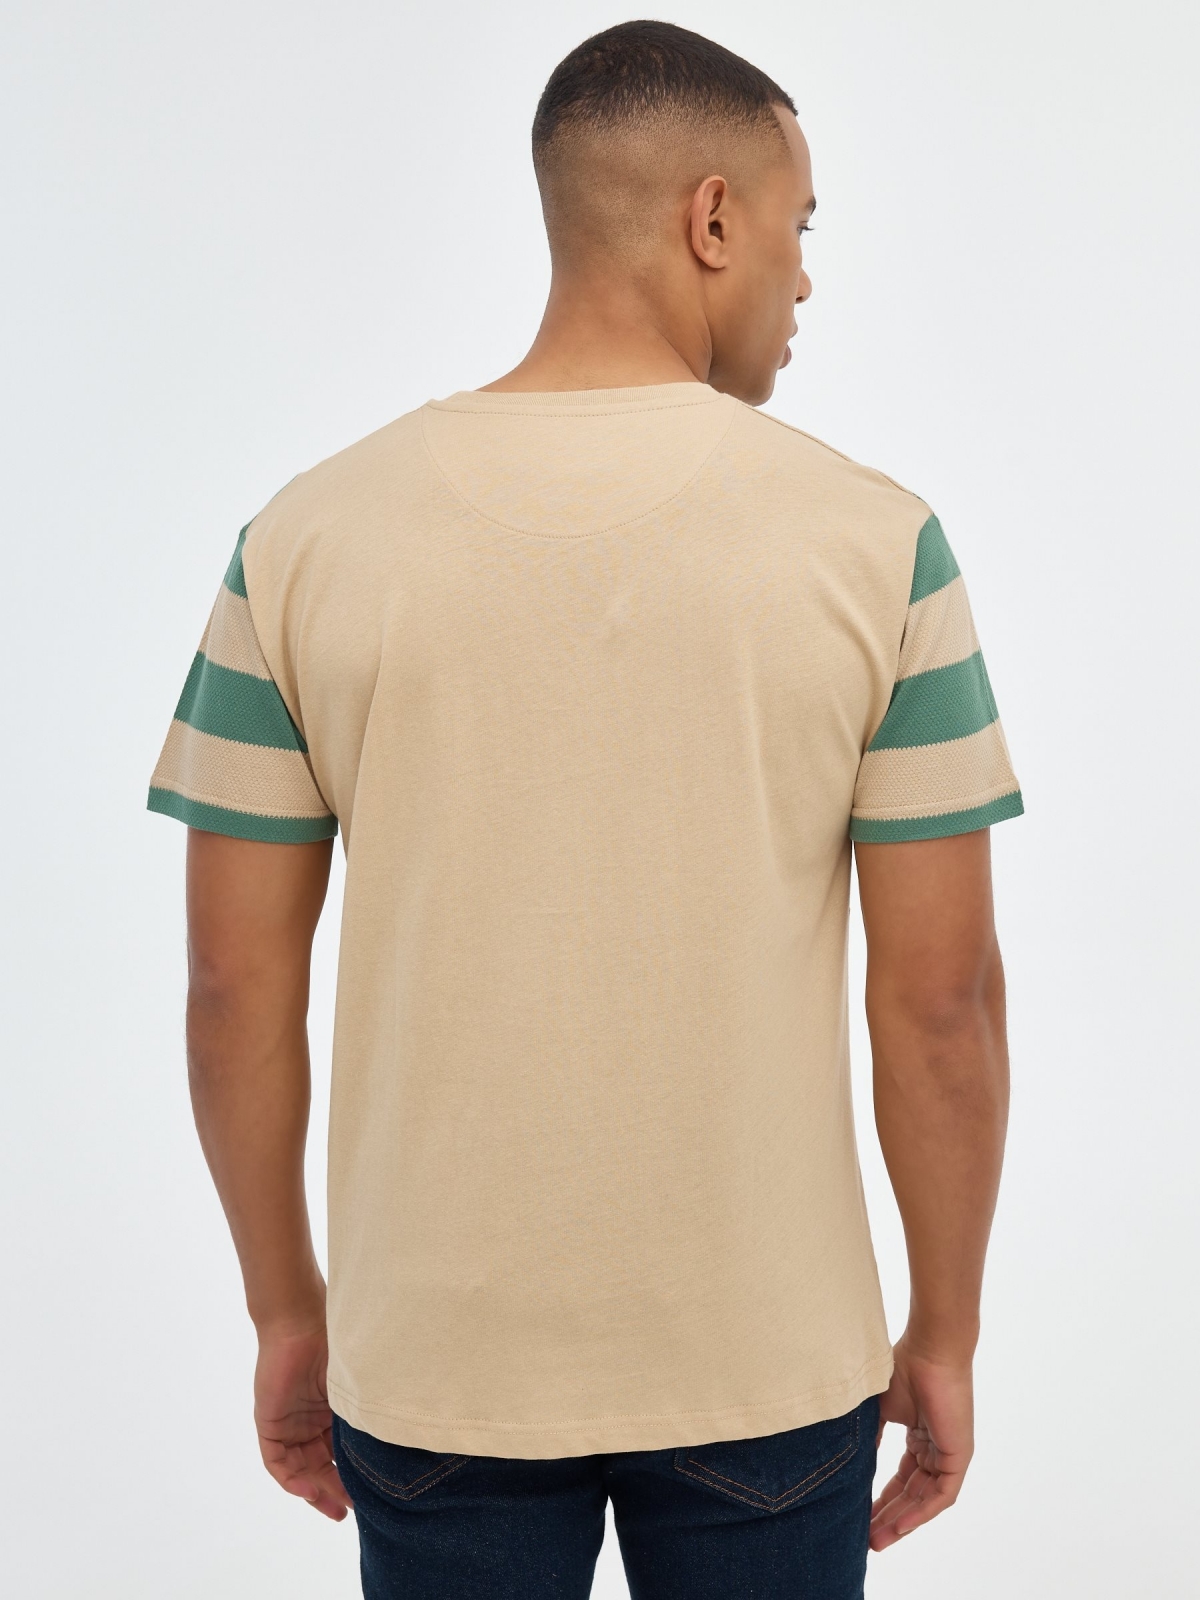 Camiseta rayas combinada arena vista media trasera